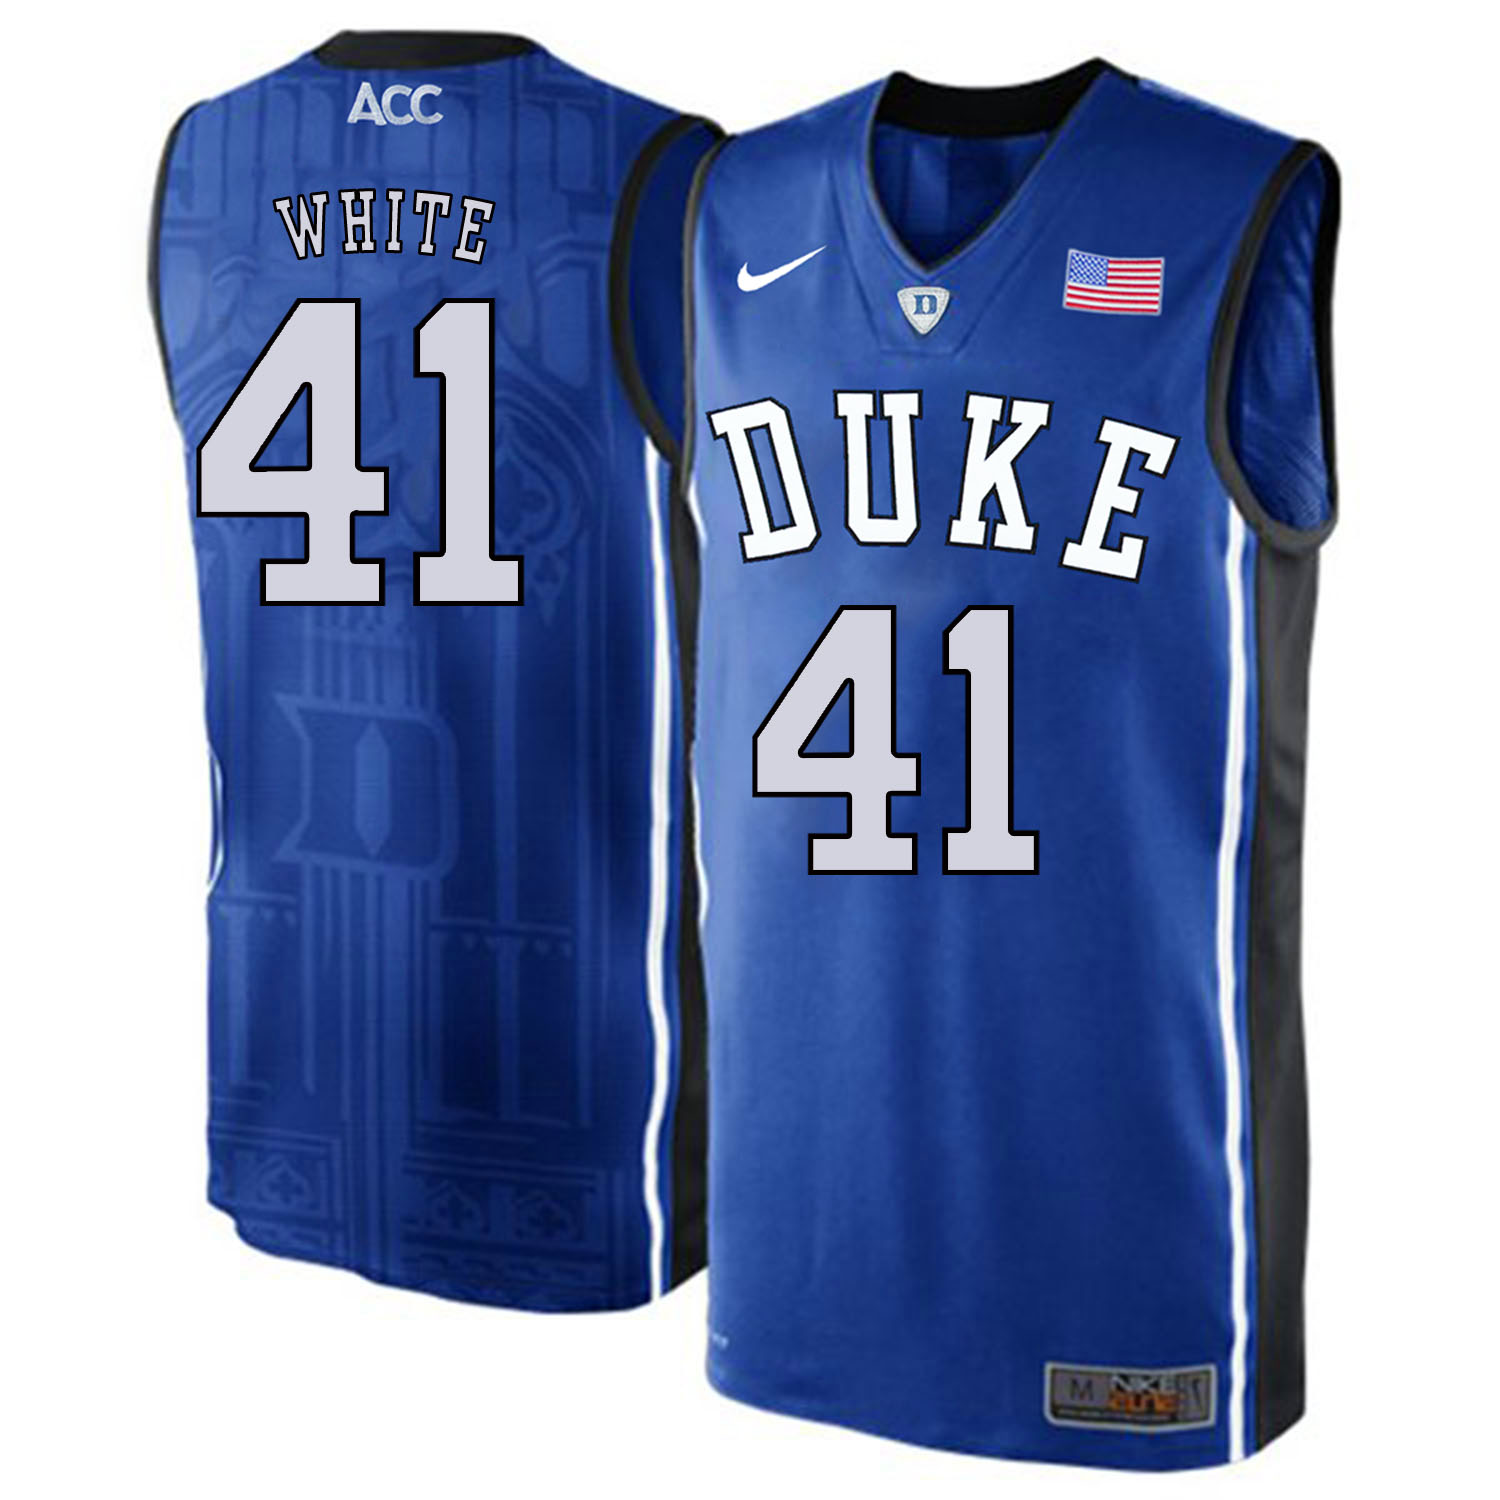 Duke Blue Devils 41 Jack White Blue Elite Nike College Basketball Jersey